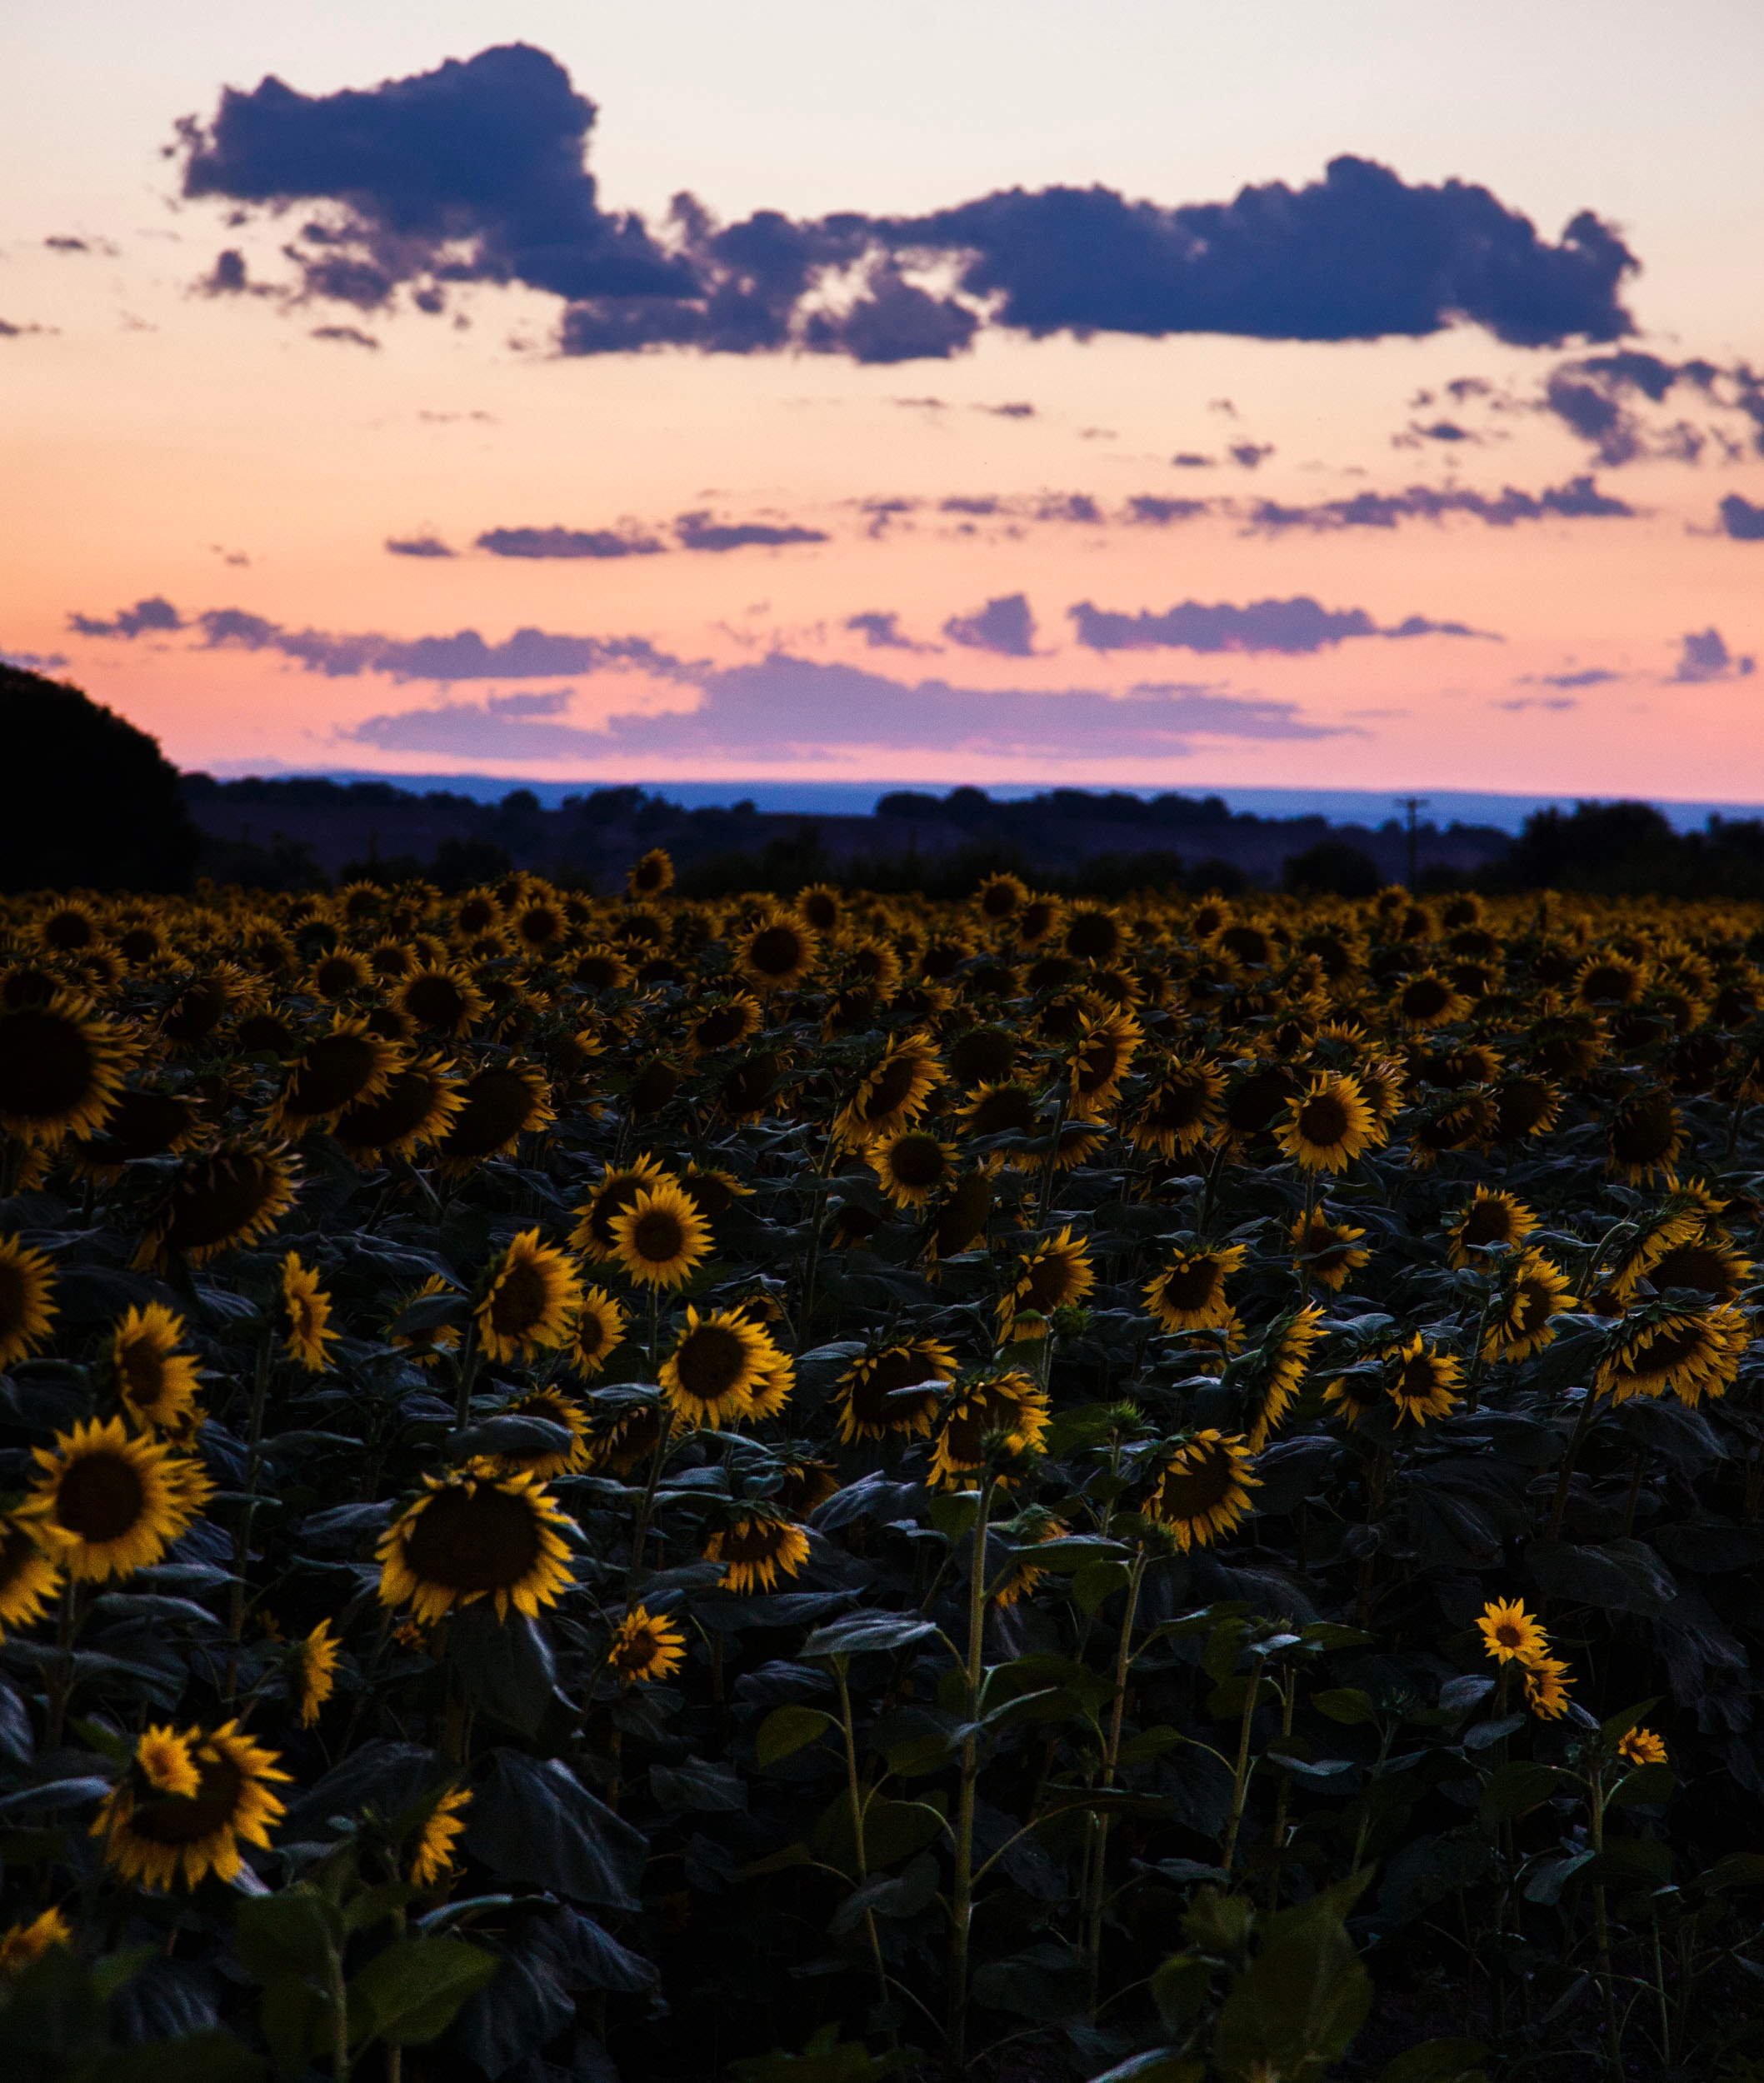 sunflowers, miscellaneous, sunset, sky, miscellanea, field